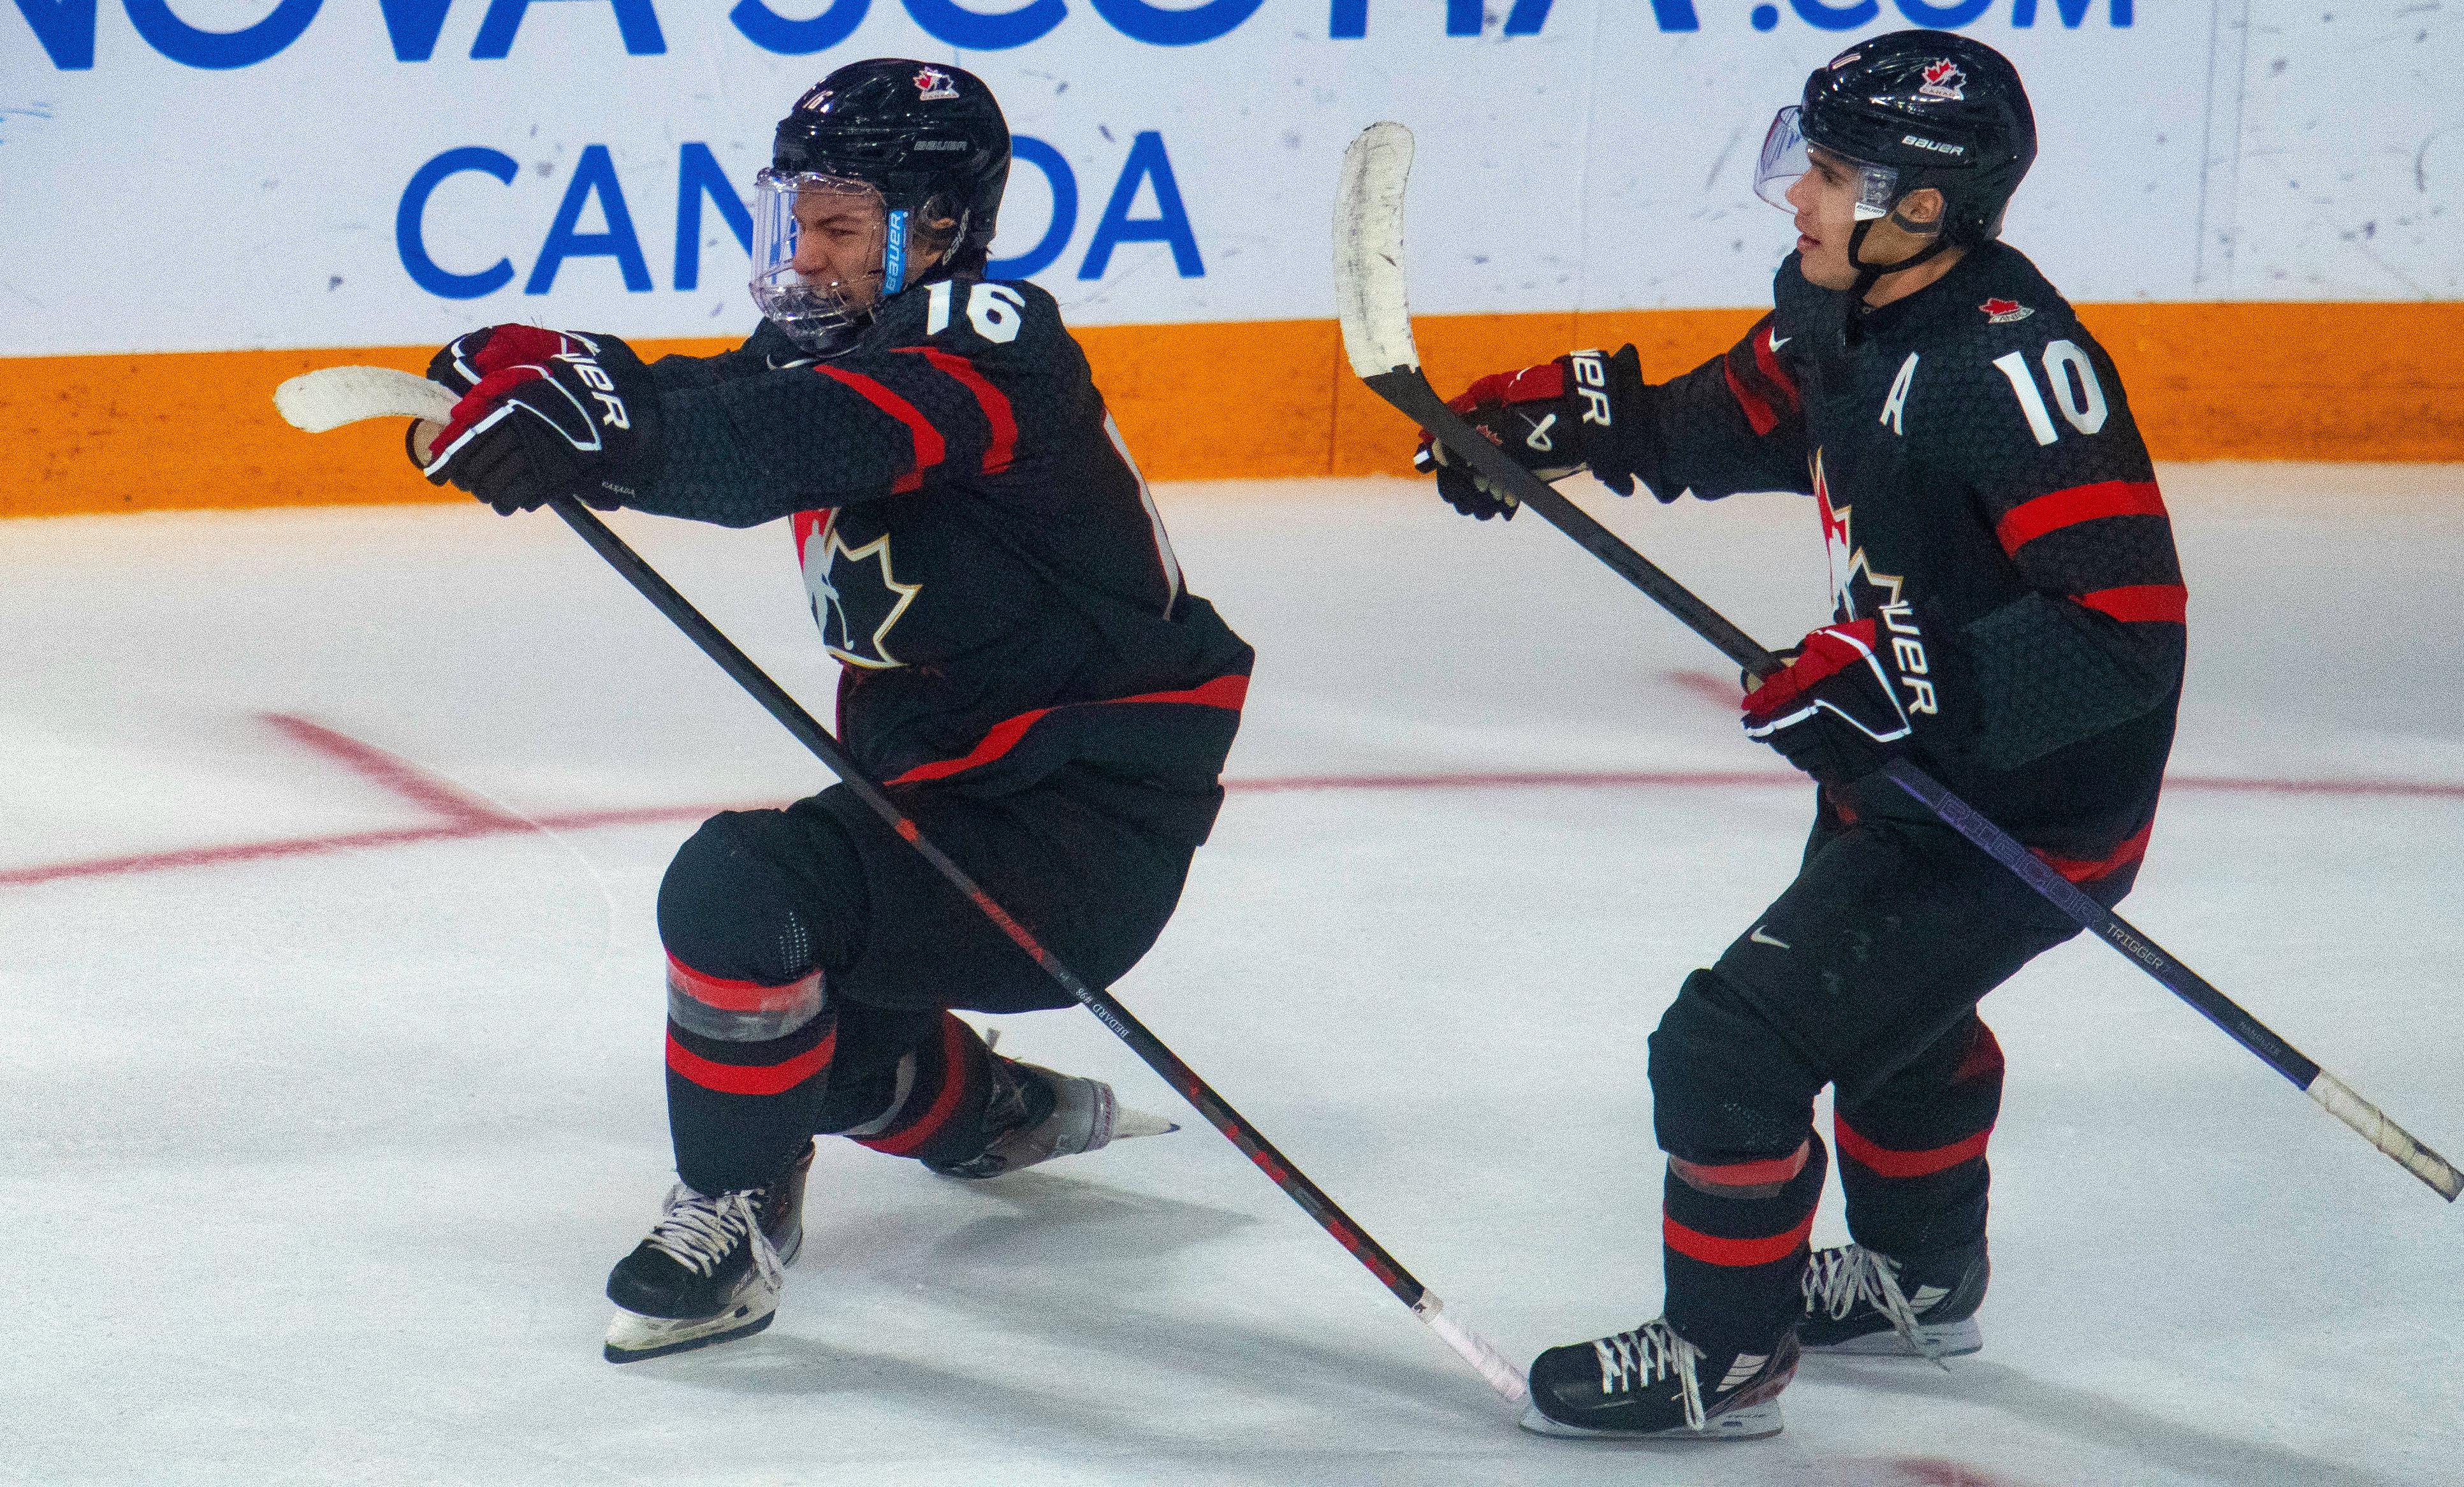 World juniors: Bedard, Canada eliminate Slovakia in OT